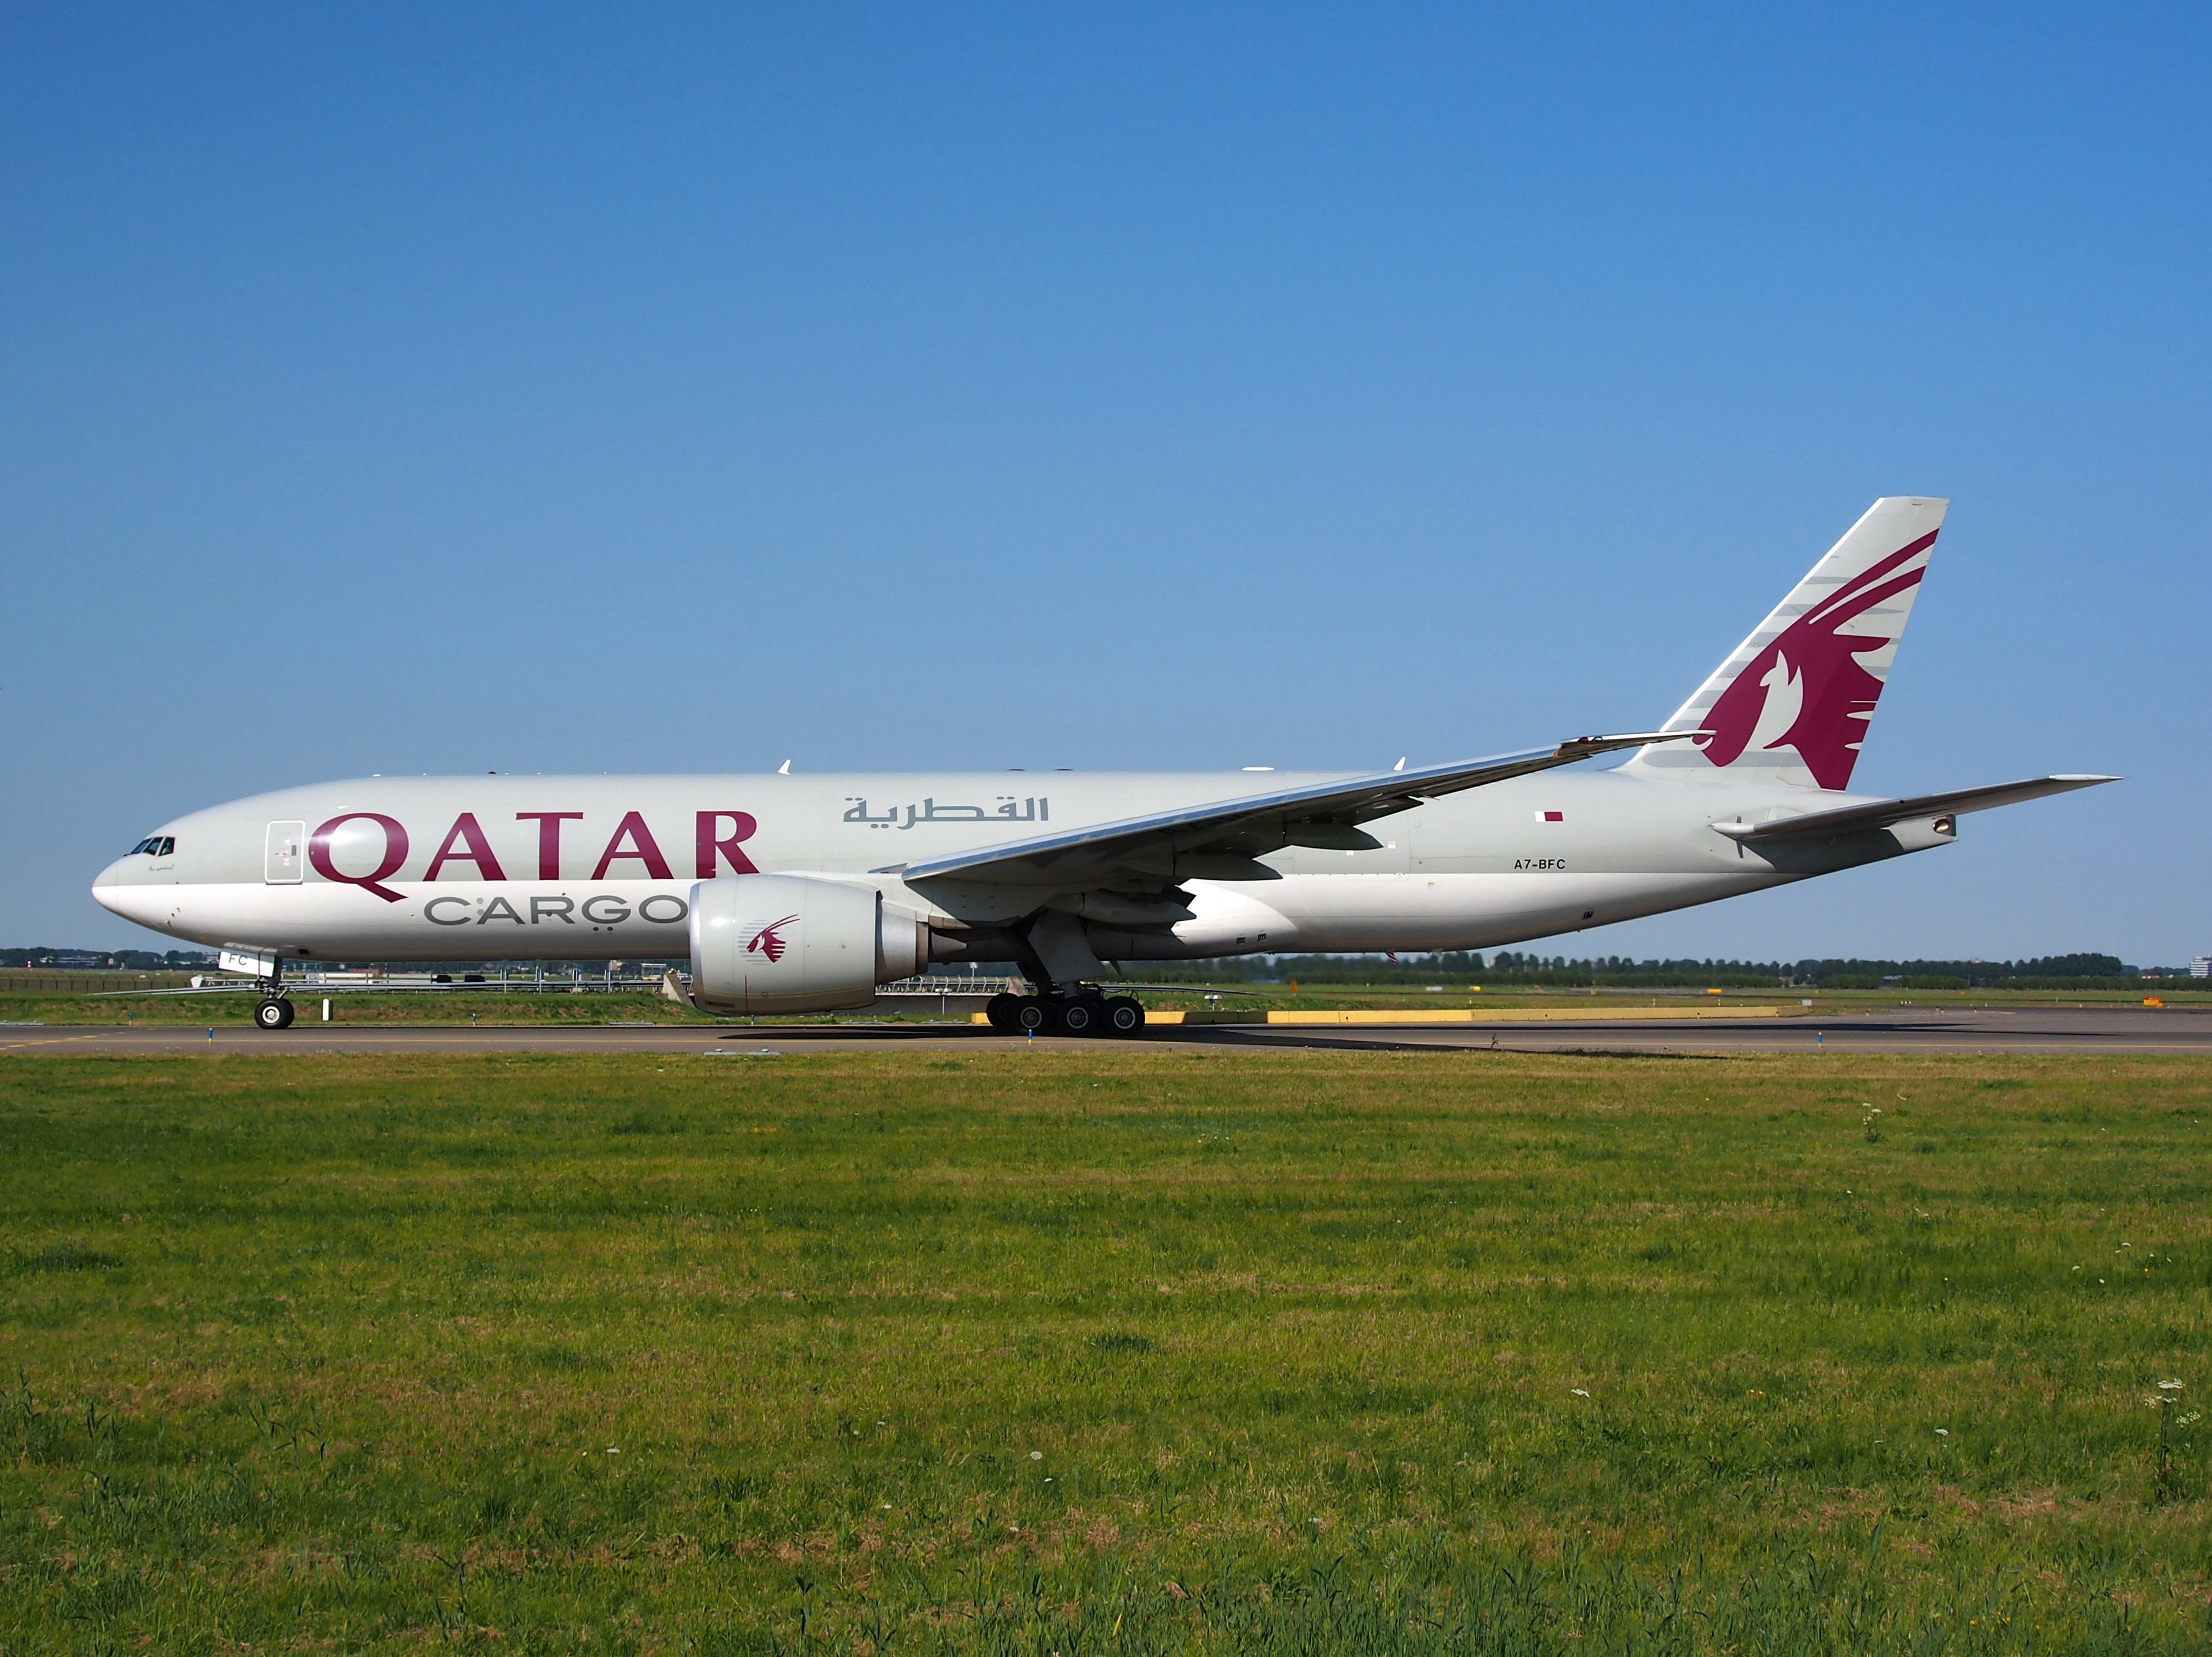 Qatar Airways Boeing 777 plane image - Free stock photo - Public Domain photo - CC0 Images